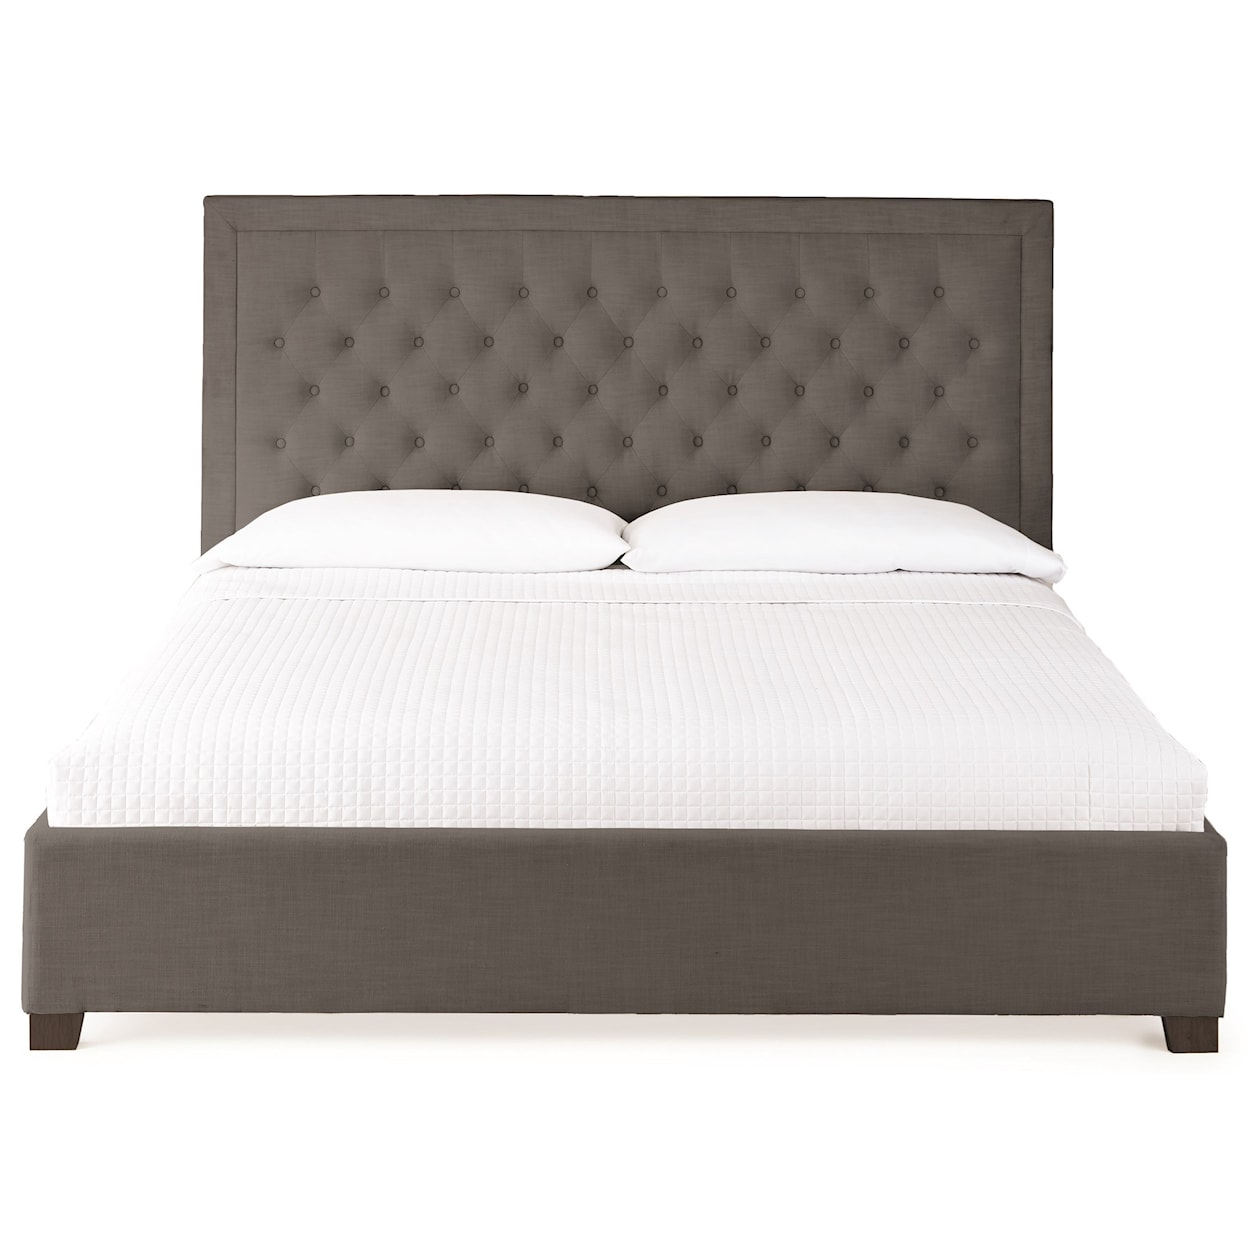 Prime Isadora Queen Upholstered Bed